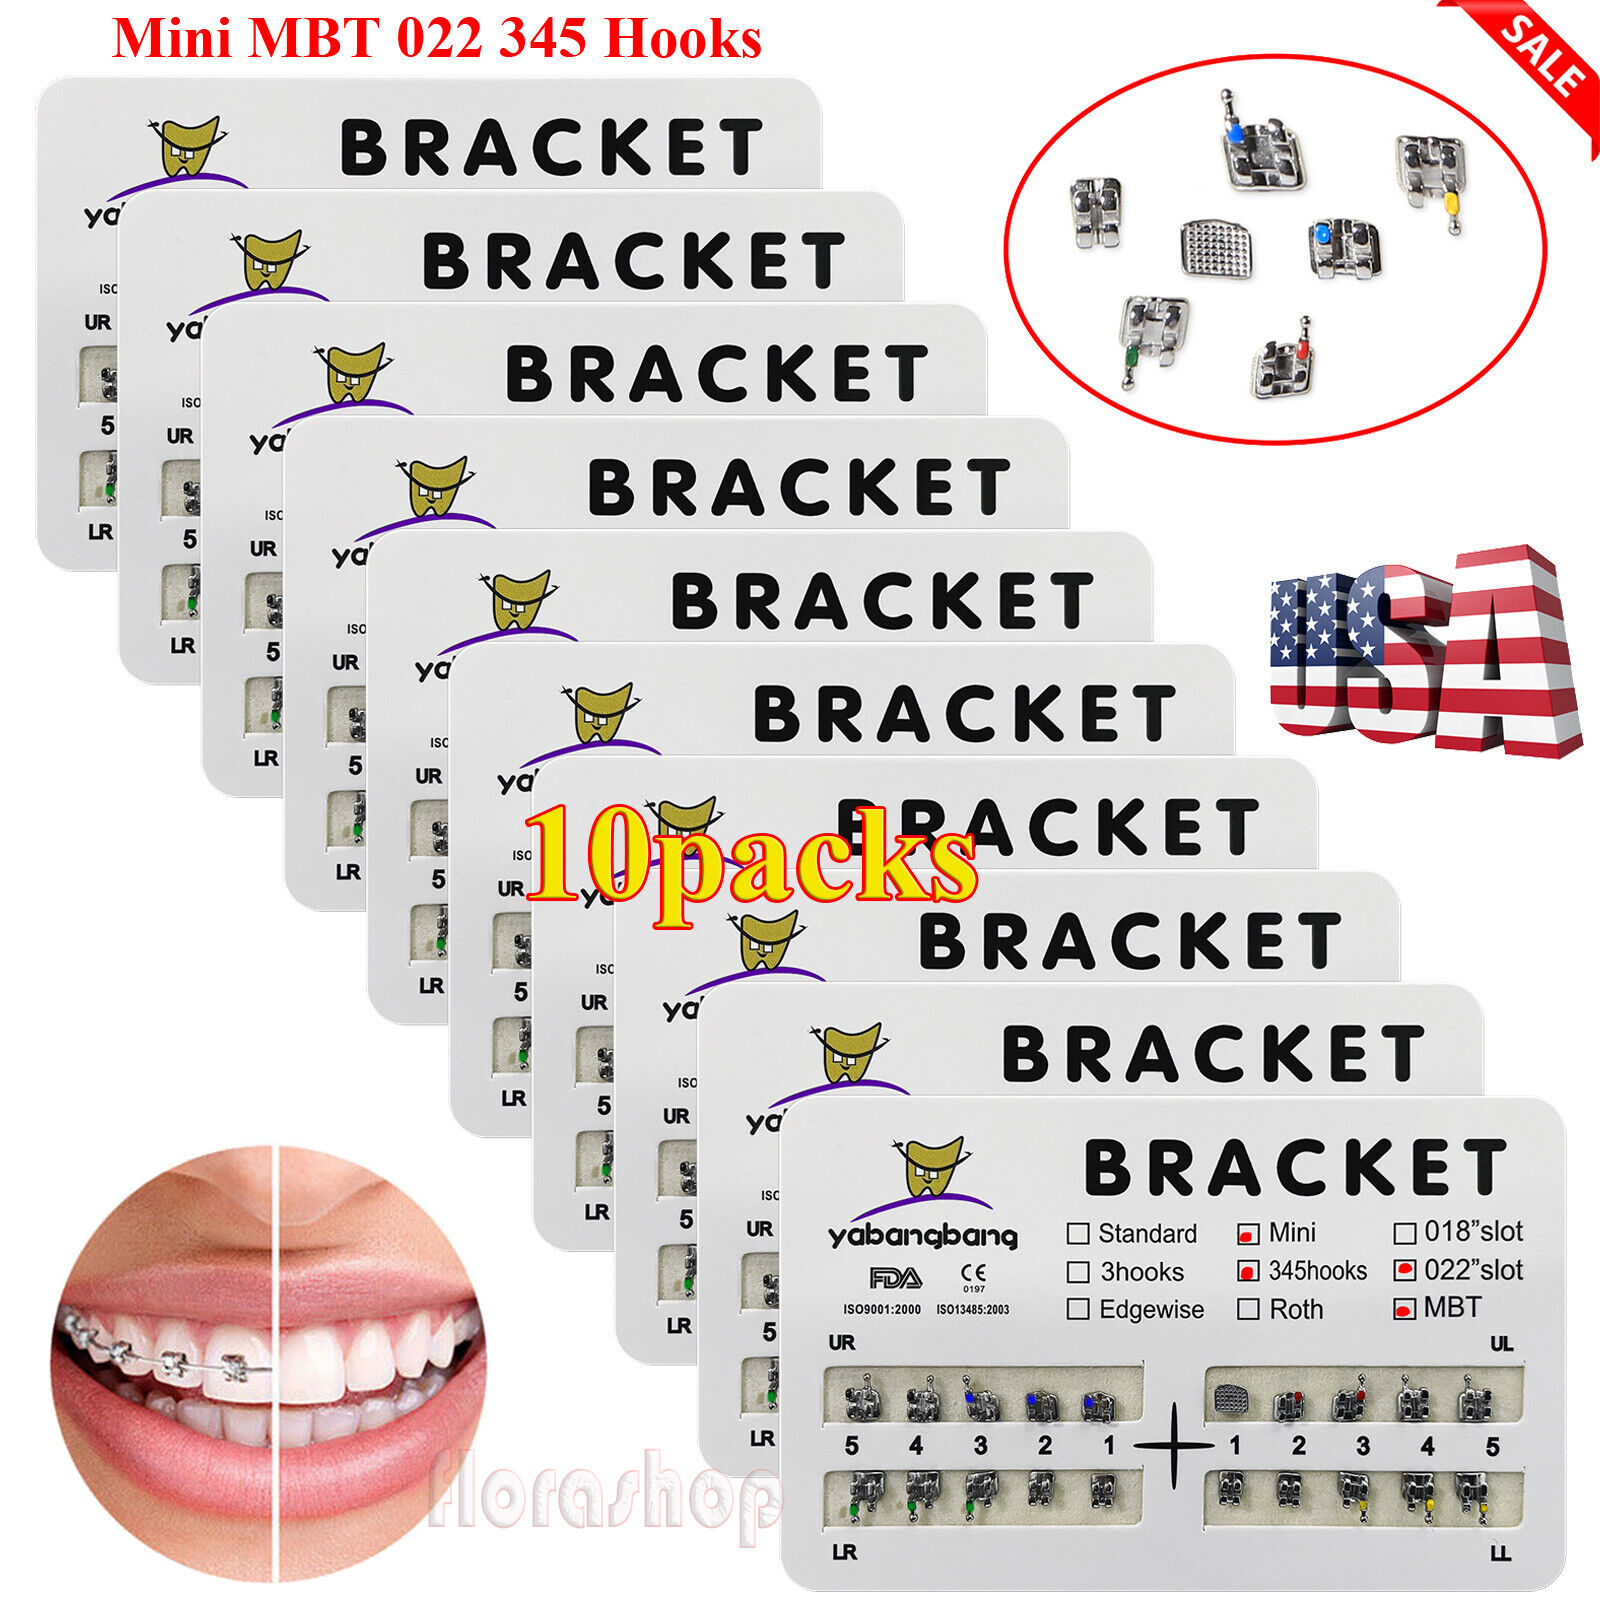 10 packs Dental Orthodontic Brackets Braces Mini Roth Slot 022 345 Hook #2 200PC Yabangbang Does Not Apply - фотография #17